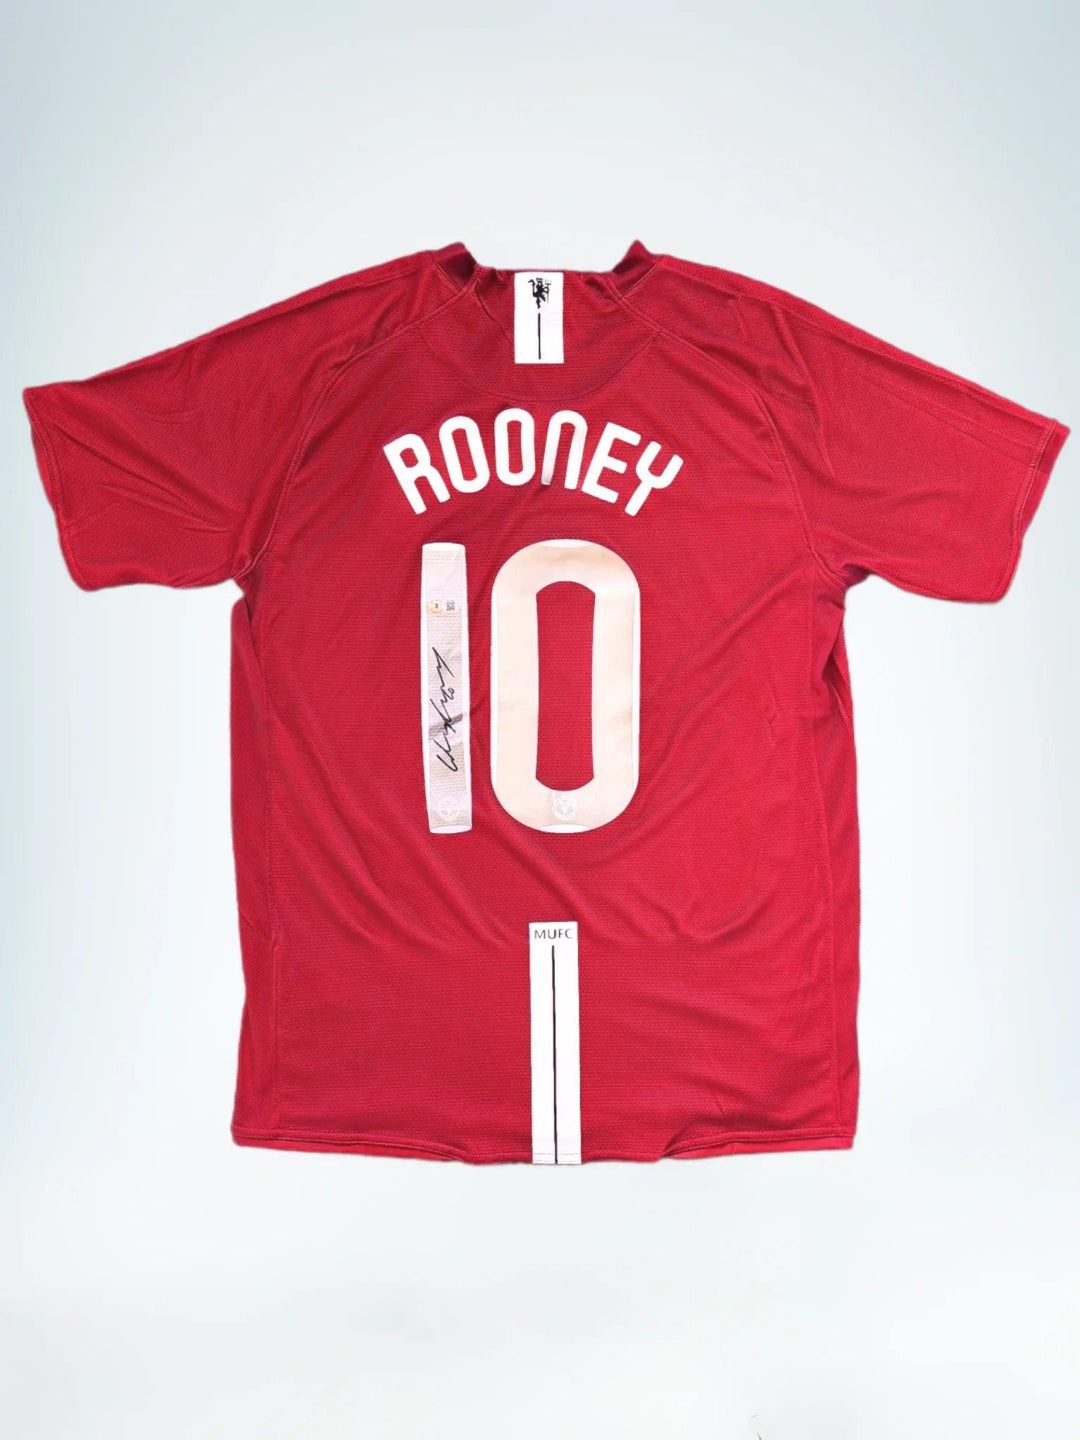 Wayne Rooney 10 Manchester United 2007-2008 - Signed Soccer Shirt | UEFA Champions League Winner